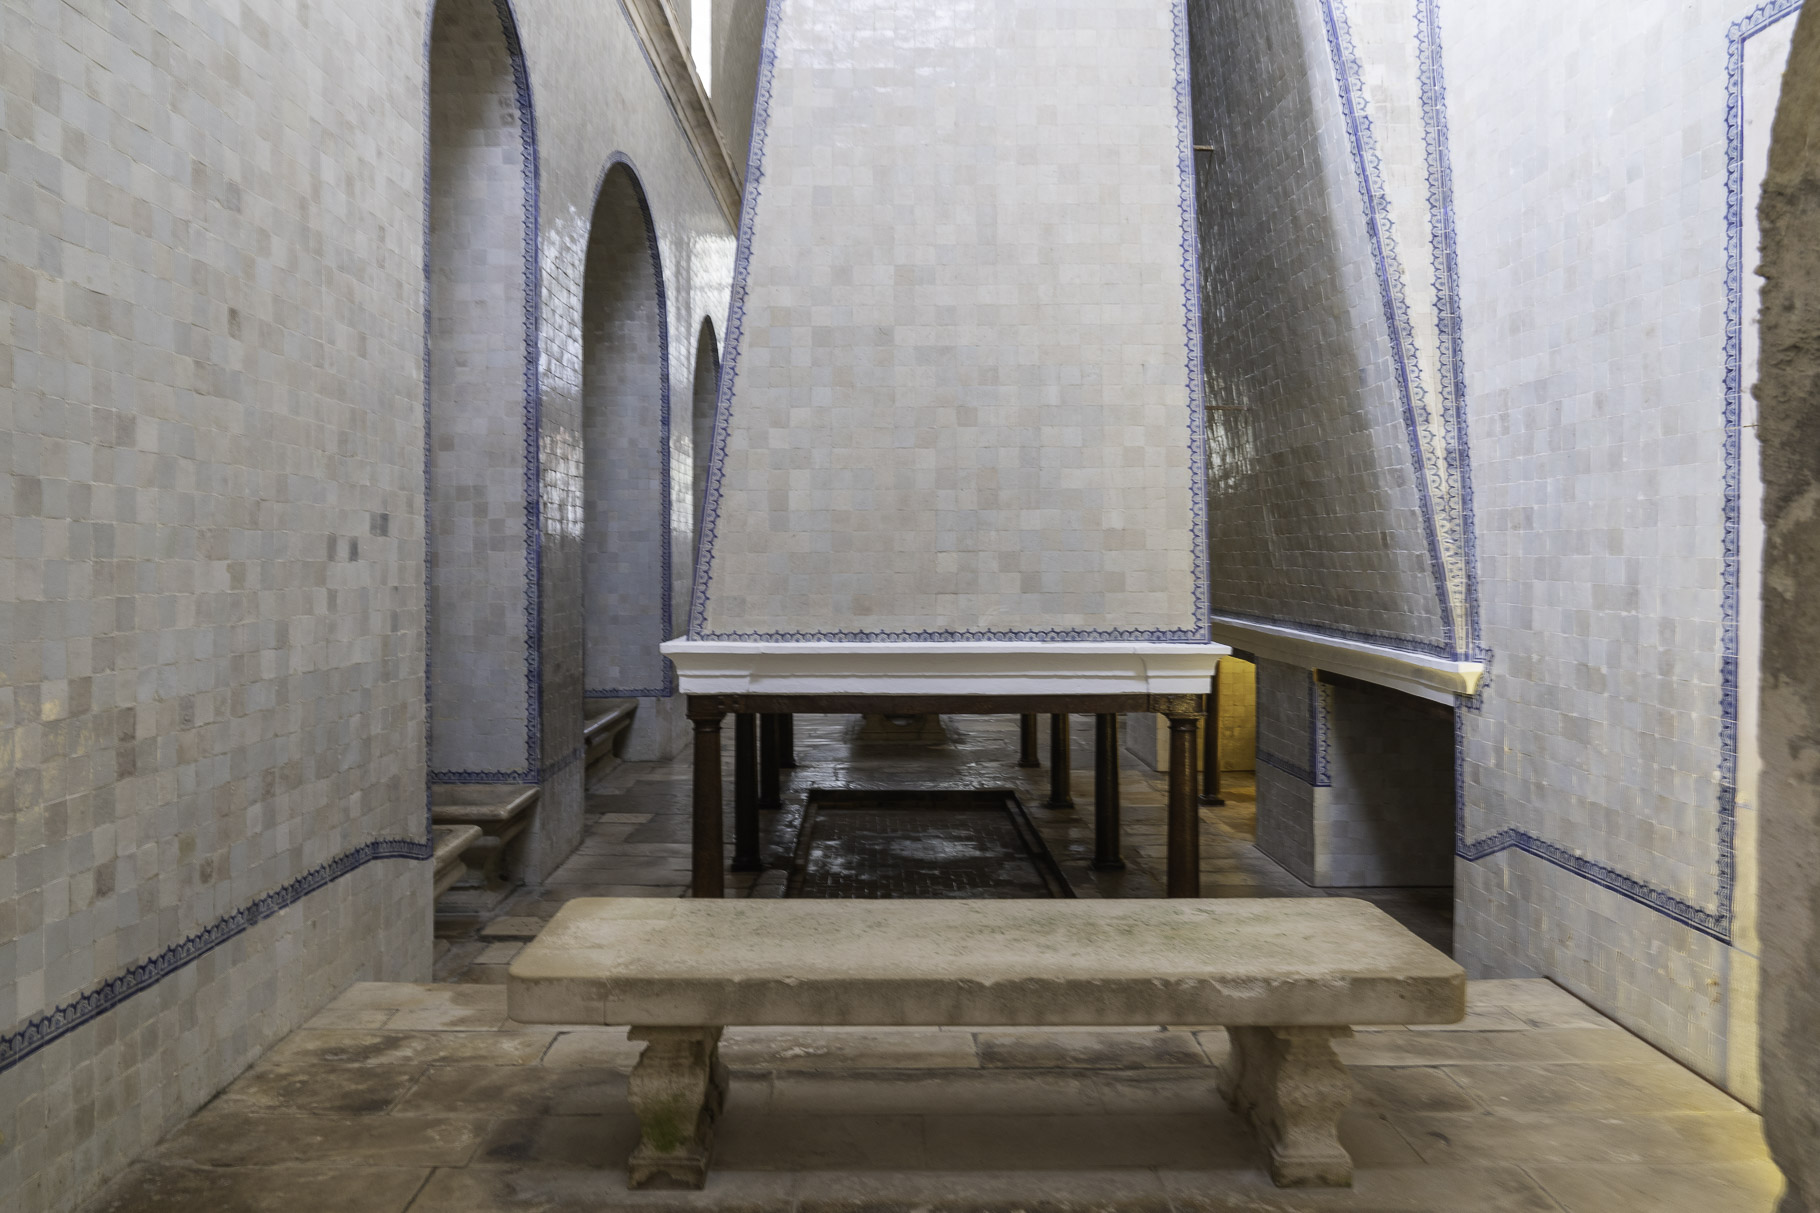 Bild: Kamin in der Küche in der Mosteiro de Santa Maria de Alcobaça